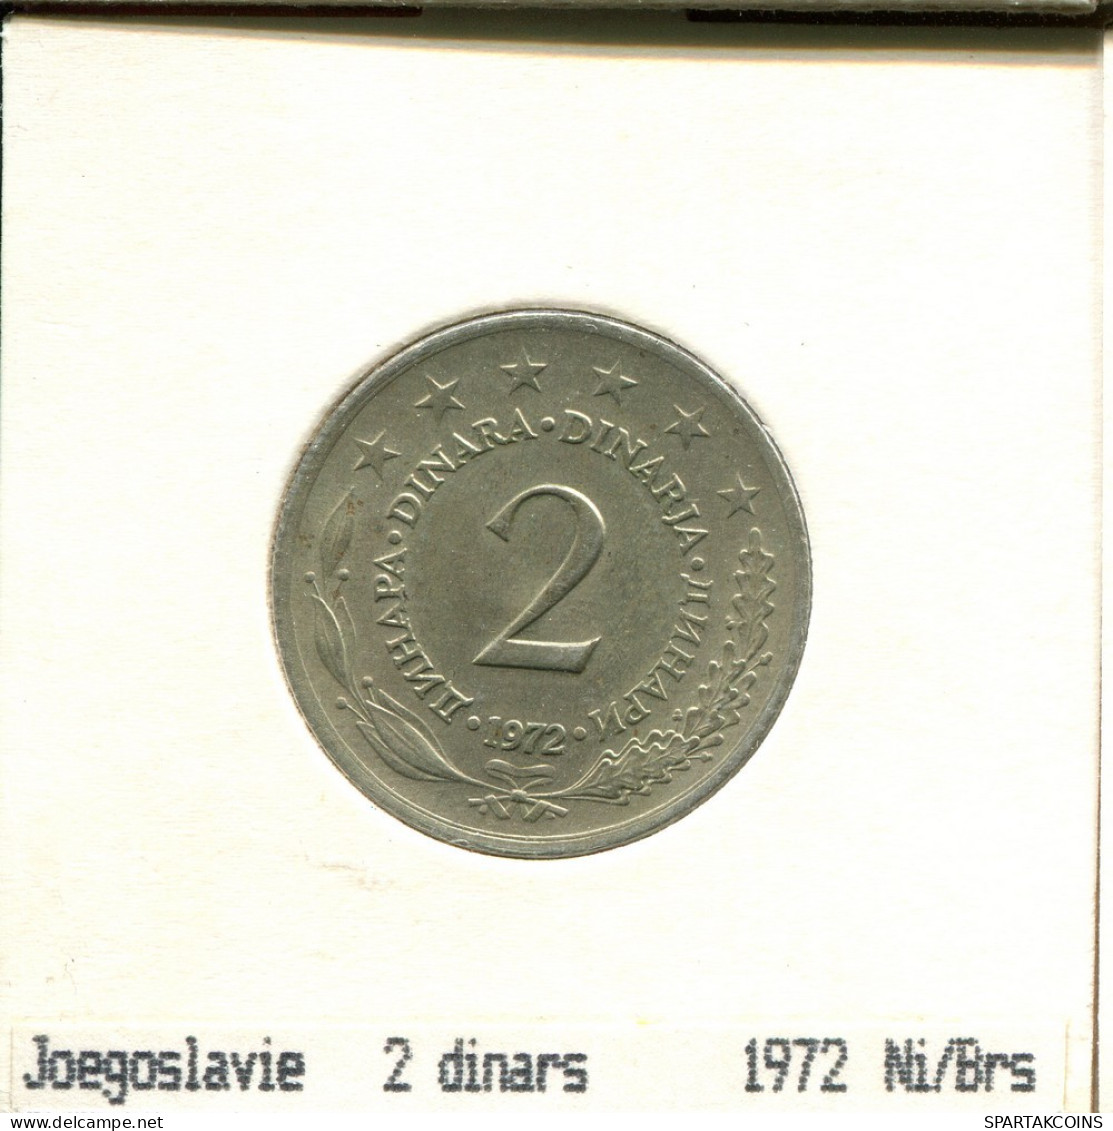 2 DINARA 1972 JUGOSLAWIEN YUGOSLAVIA Münze #AS608.D.A - Joegoslavië